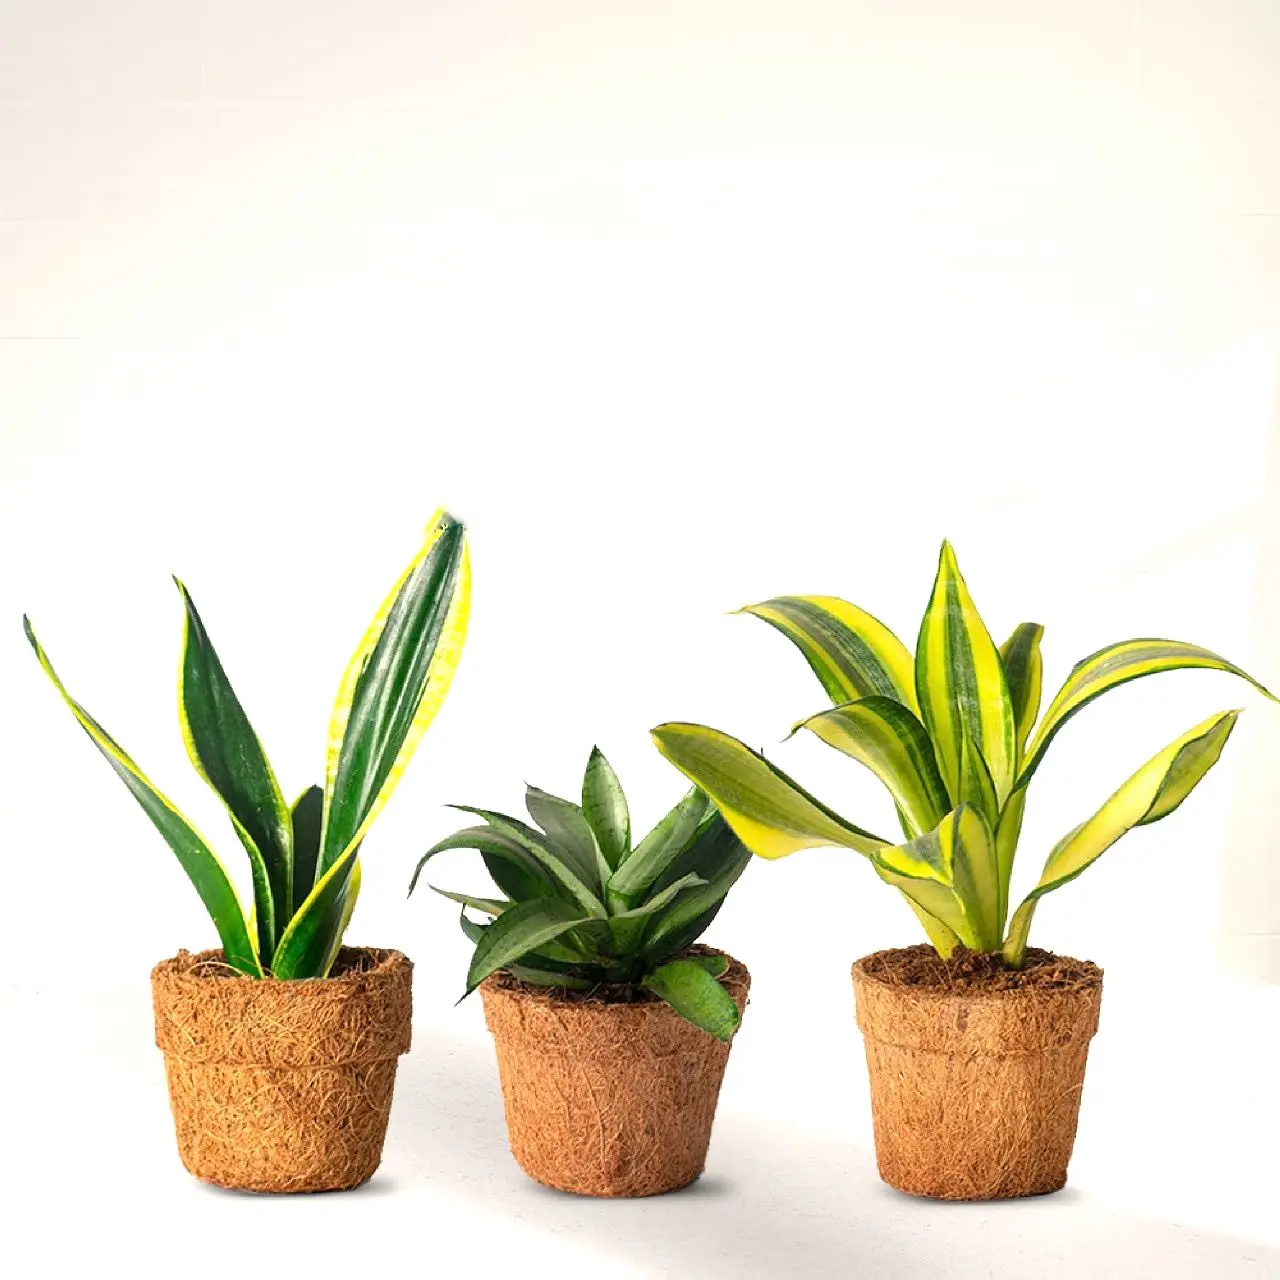 Small pot for plants grow farming gardening hydroponics coco fiber natural conut coir pots cheapest price